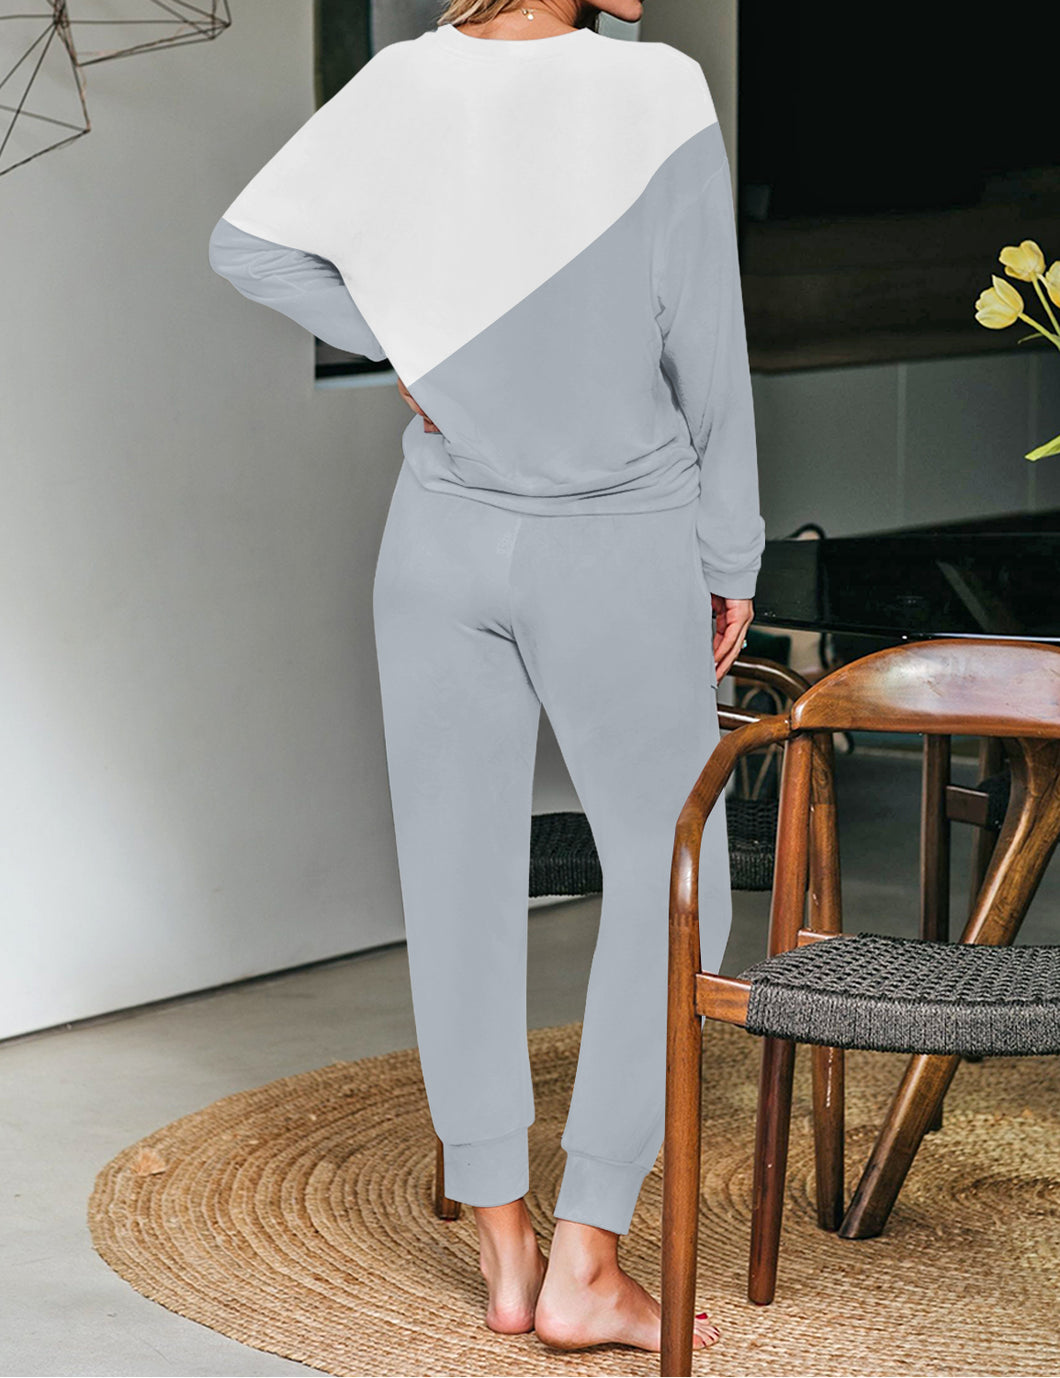 luvamia Women's Casual Pajamas Sets Long Sleeve Tops and Pants